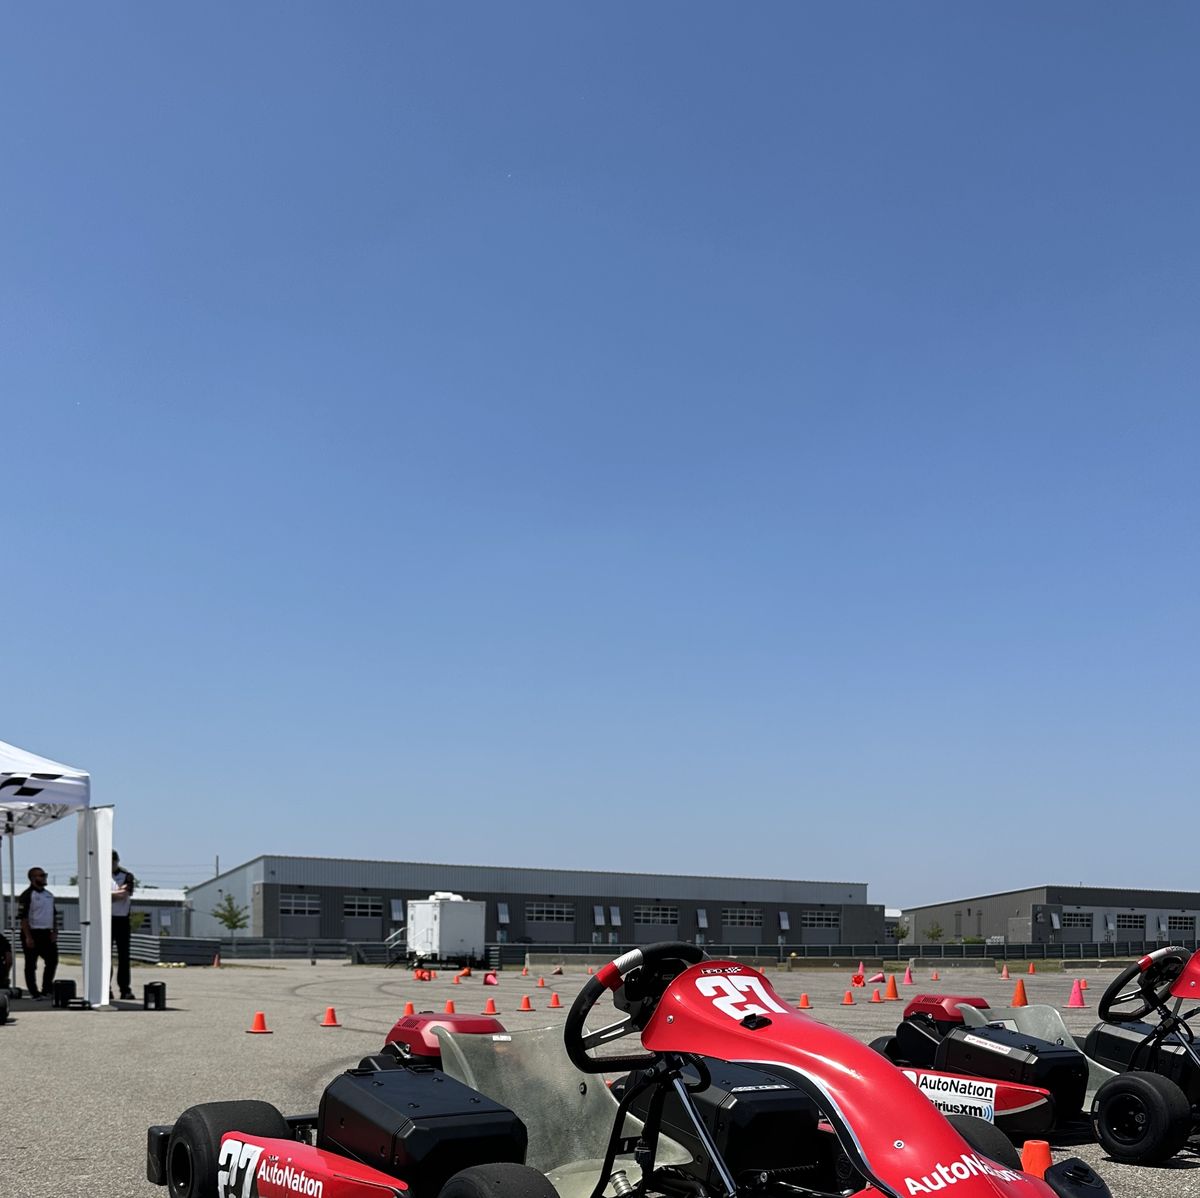 klaver Ende Kammer Honda's eGX Kart Provides Thrills, Glimpse of Auto Racing's Future